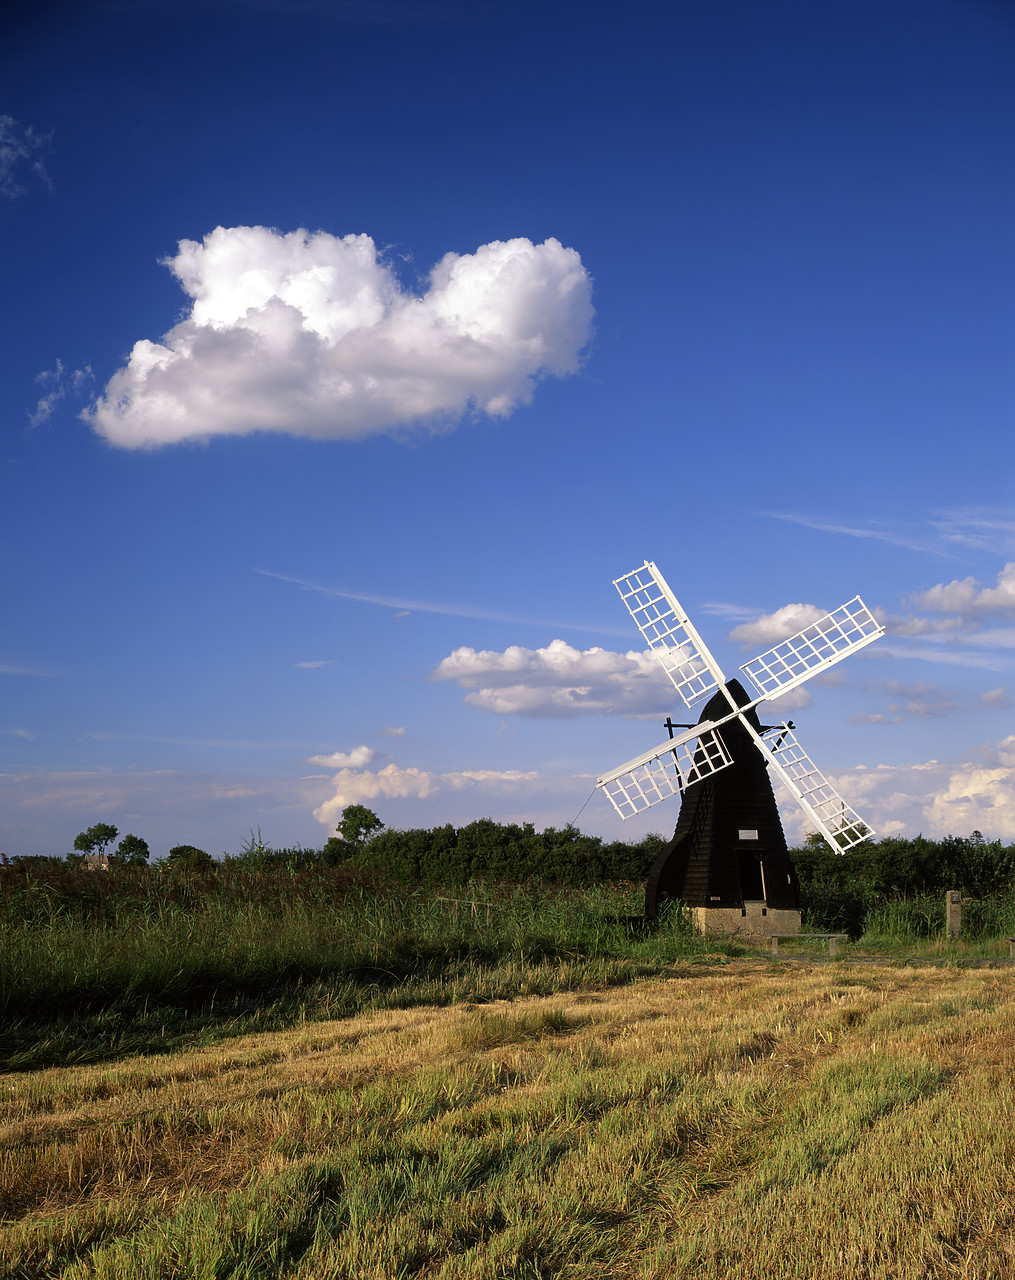 #200535-6 - Wicken Fen Windmill, Wicken, Cambridgeshire, England